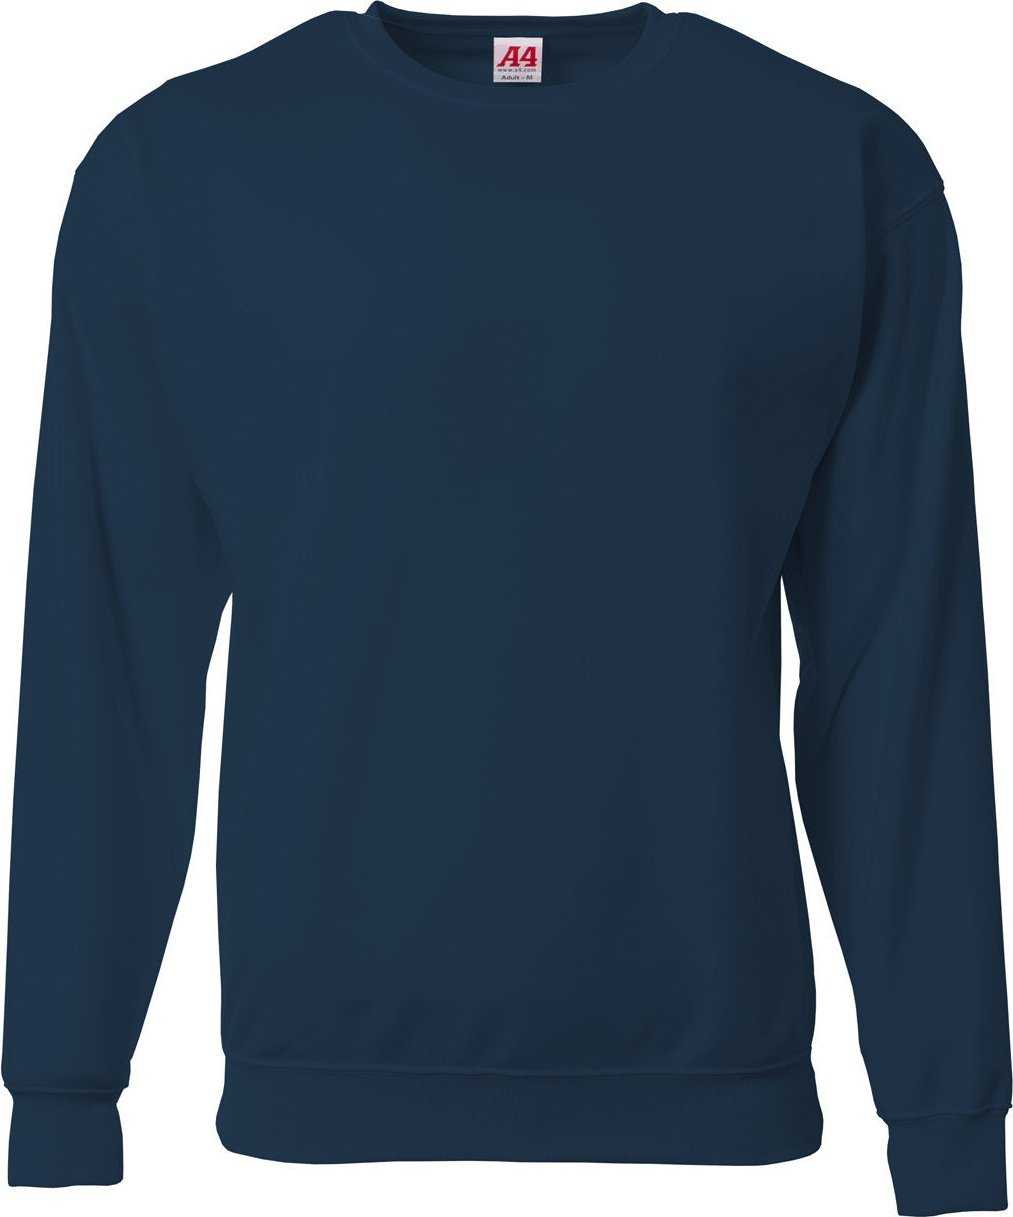 A4 NB4275 Youth Sprint Sweatshirt - Navy